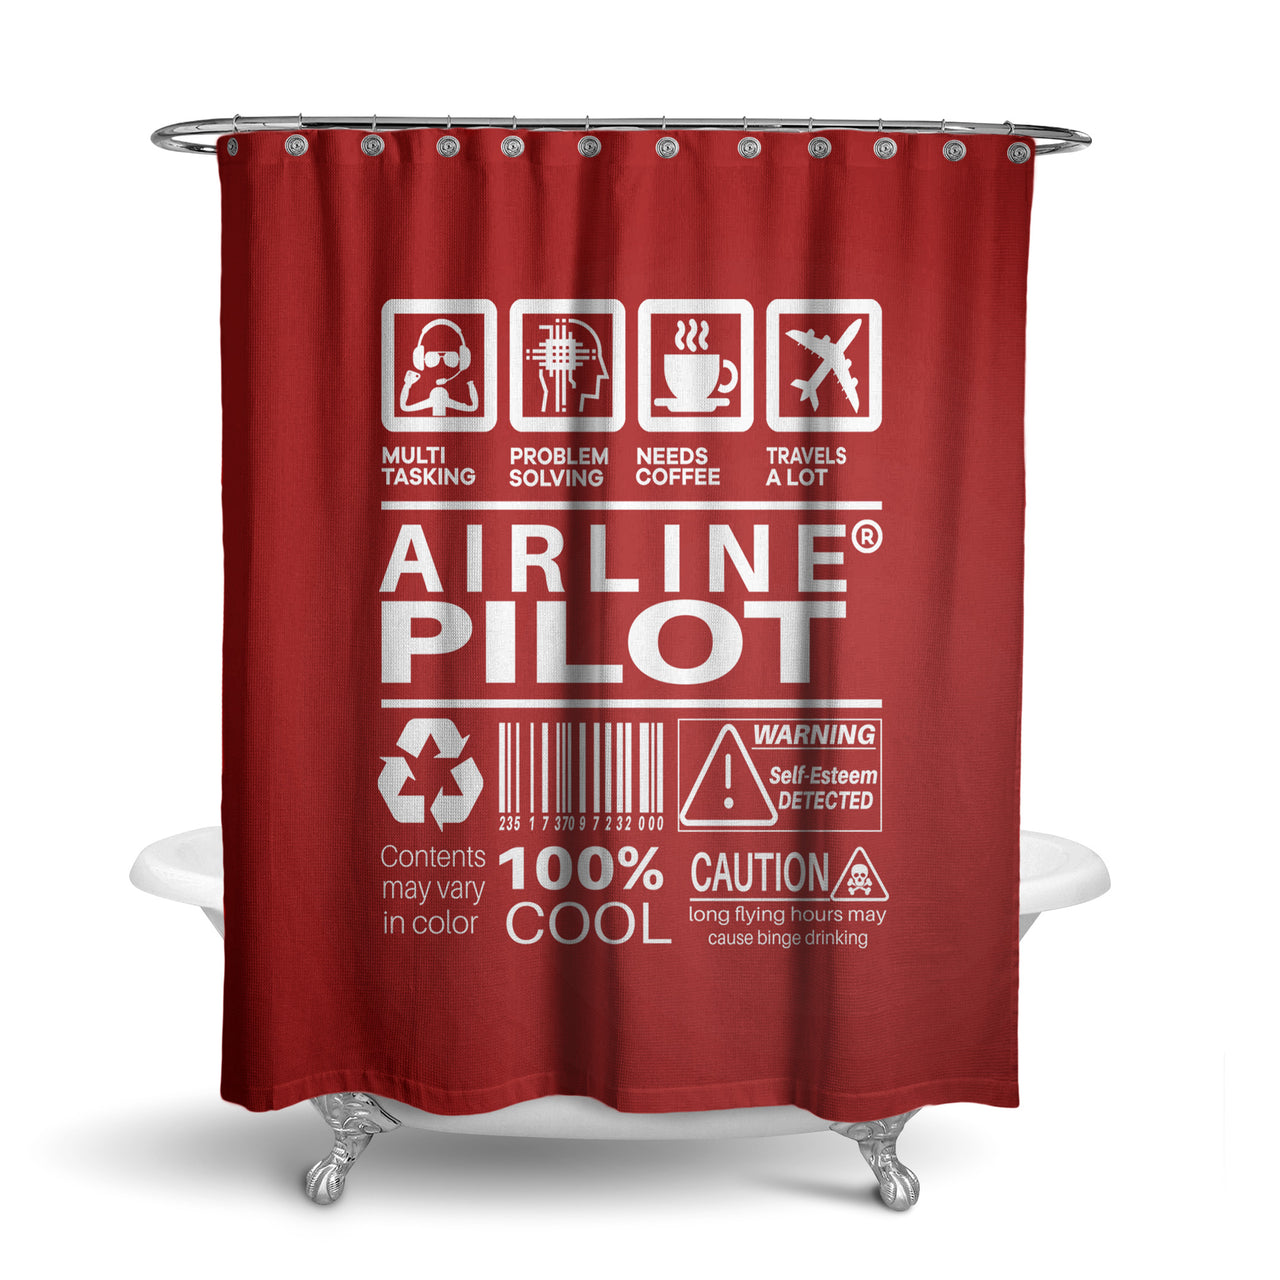 Airline Pilot Label Designed Shower Curtains